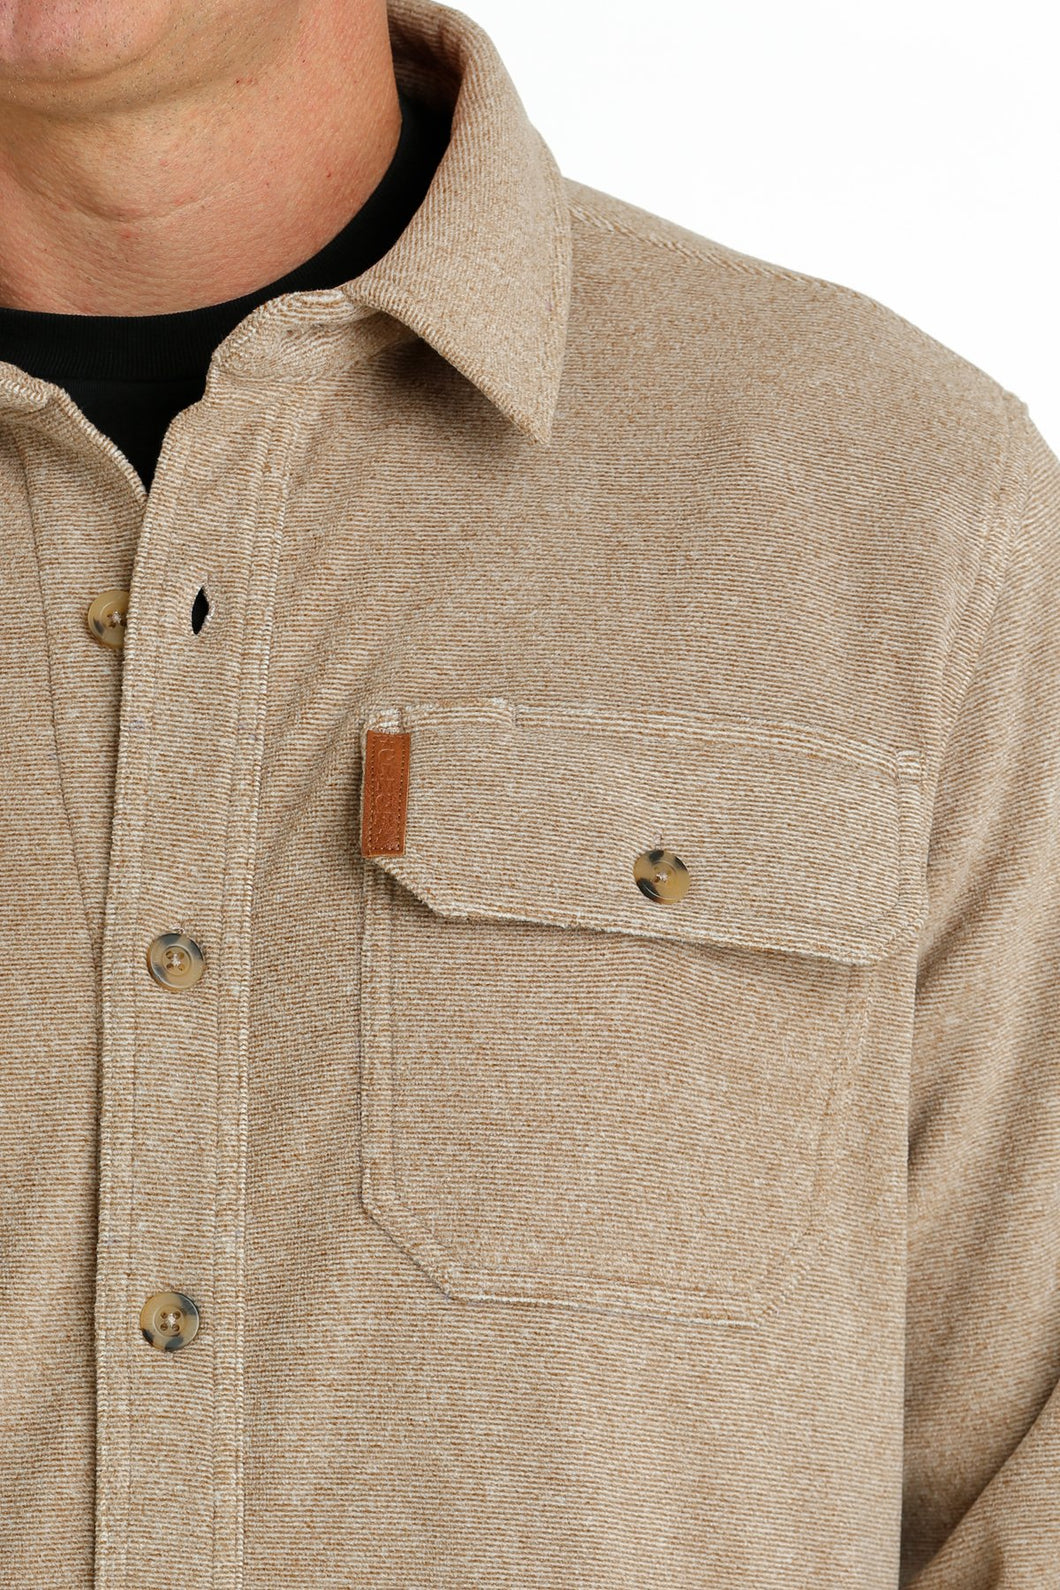 Cinch Men's Polar Fleece Caramel Shirt Jacket